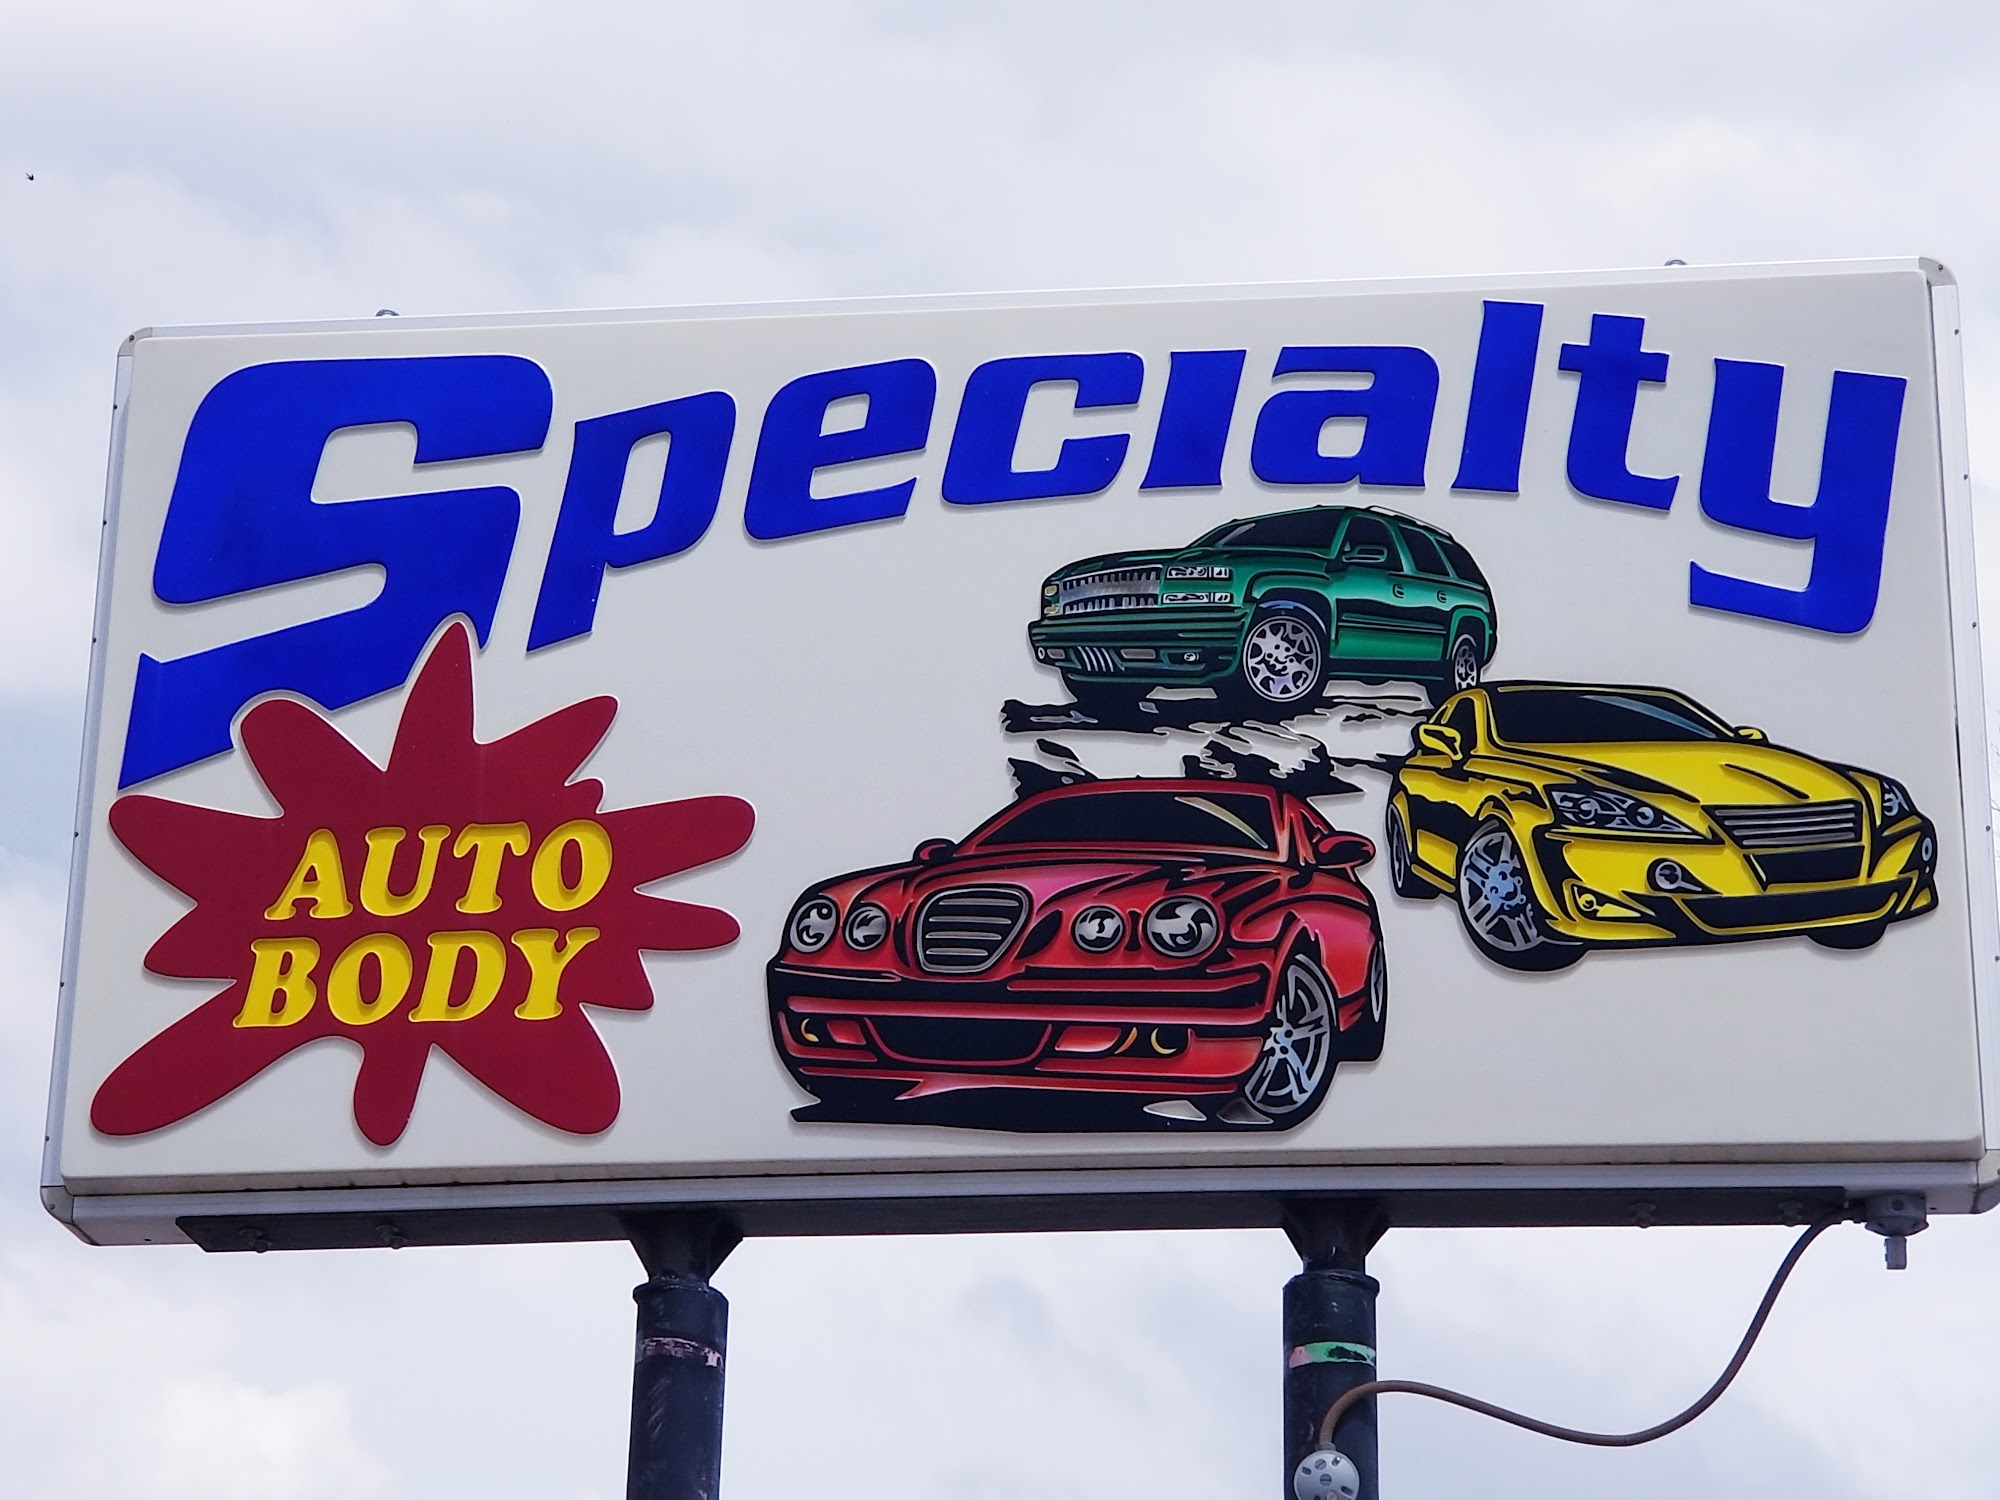 Specialty Auto Body